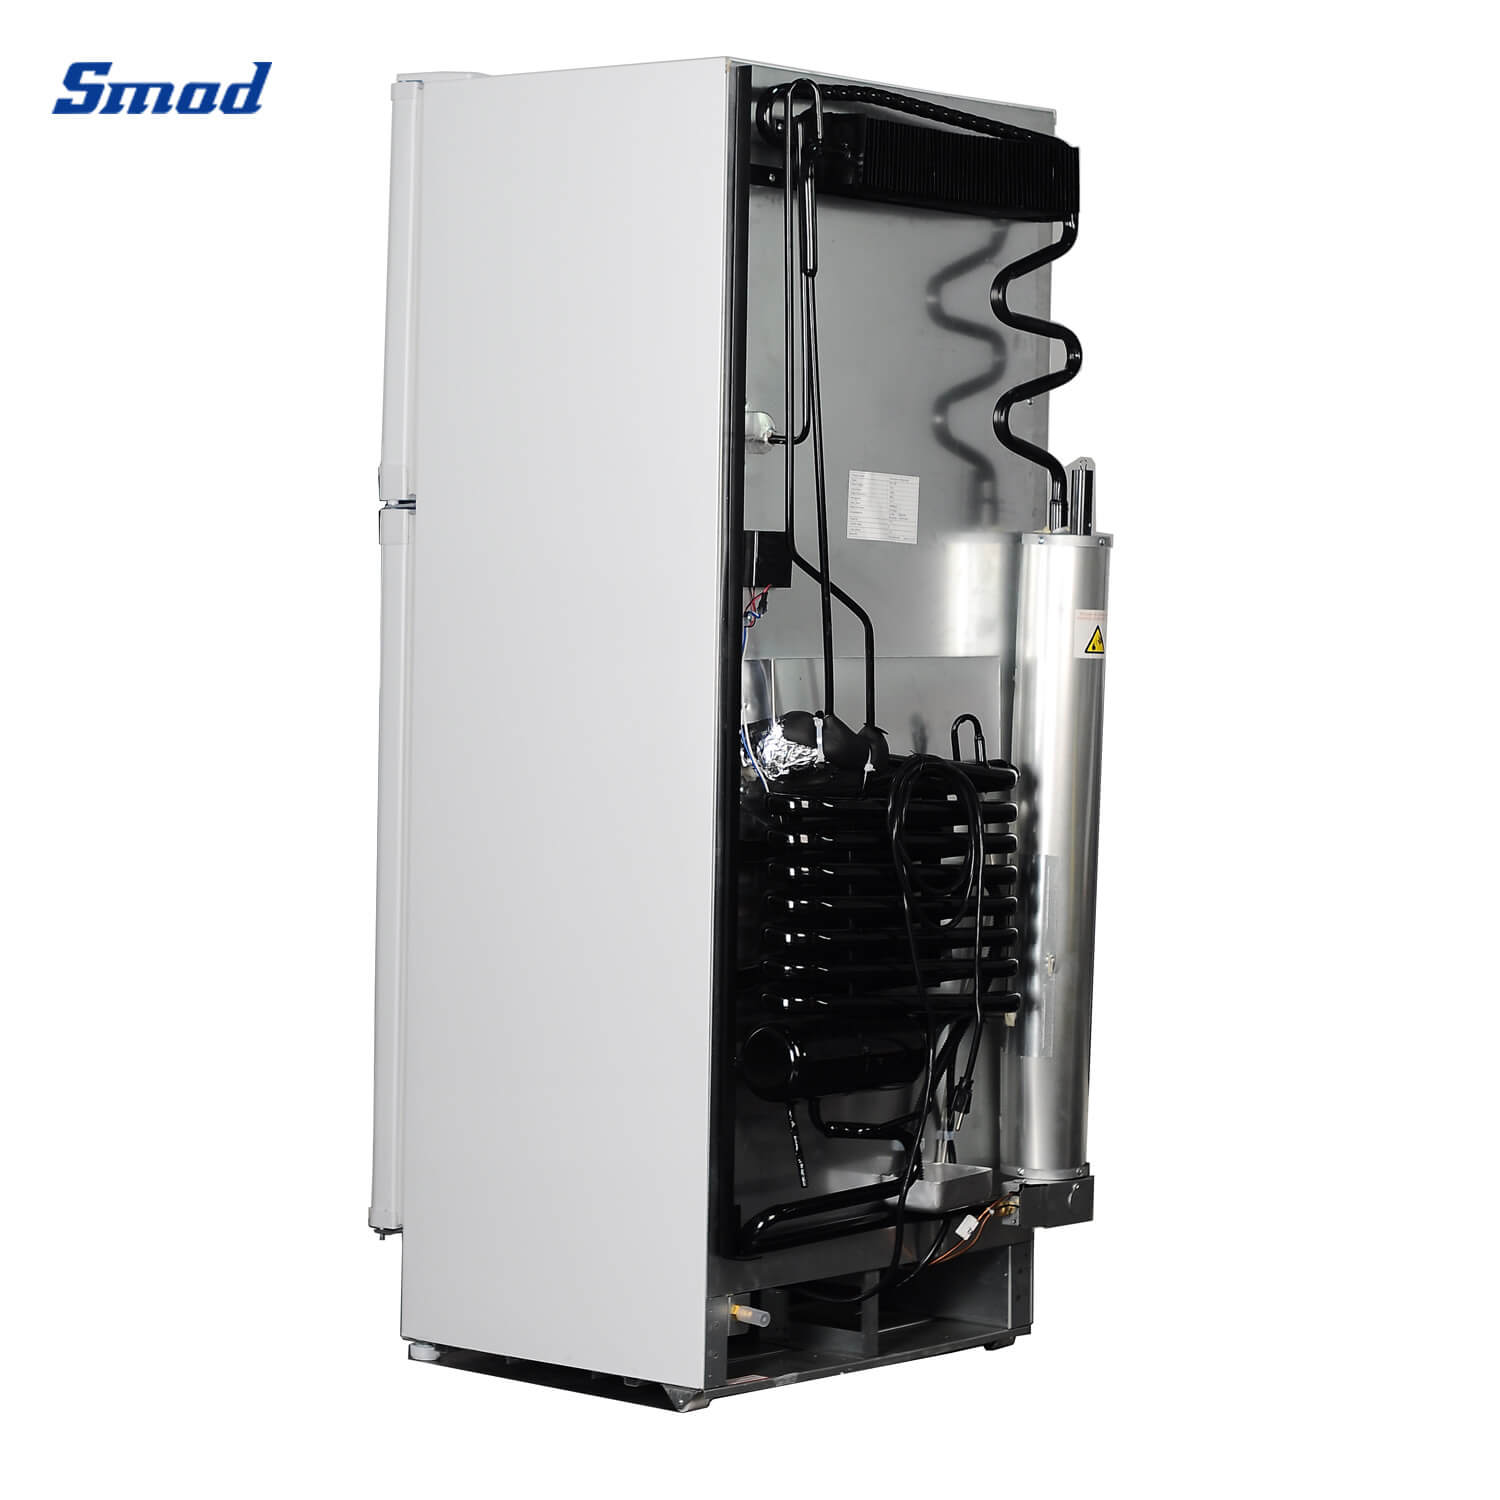 
Smad 225L Gas / Electric Double Door Fridge Freezer with Auto Defrost